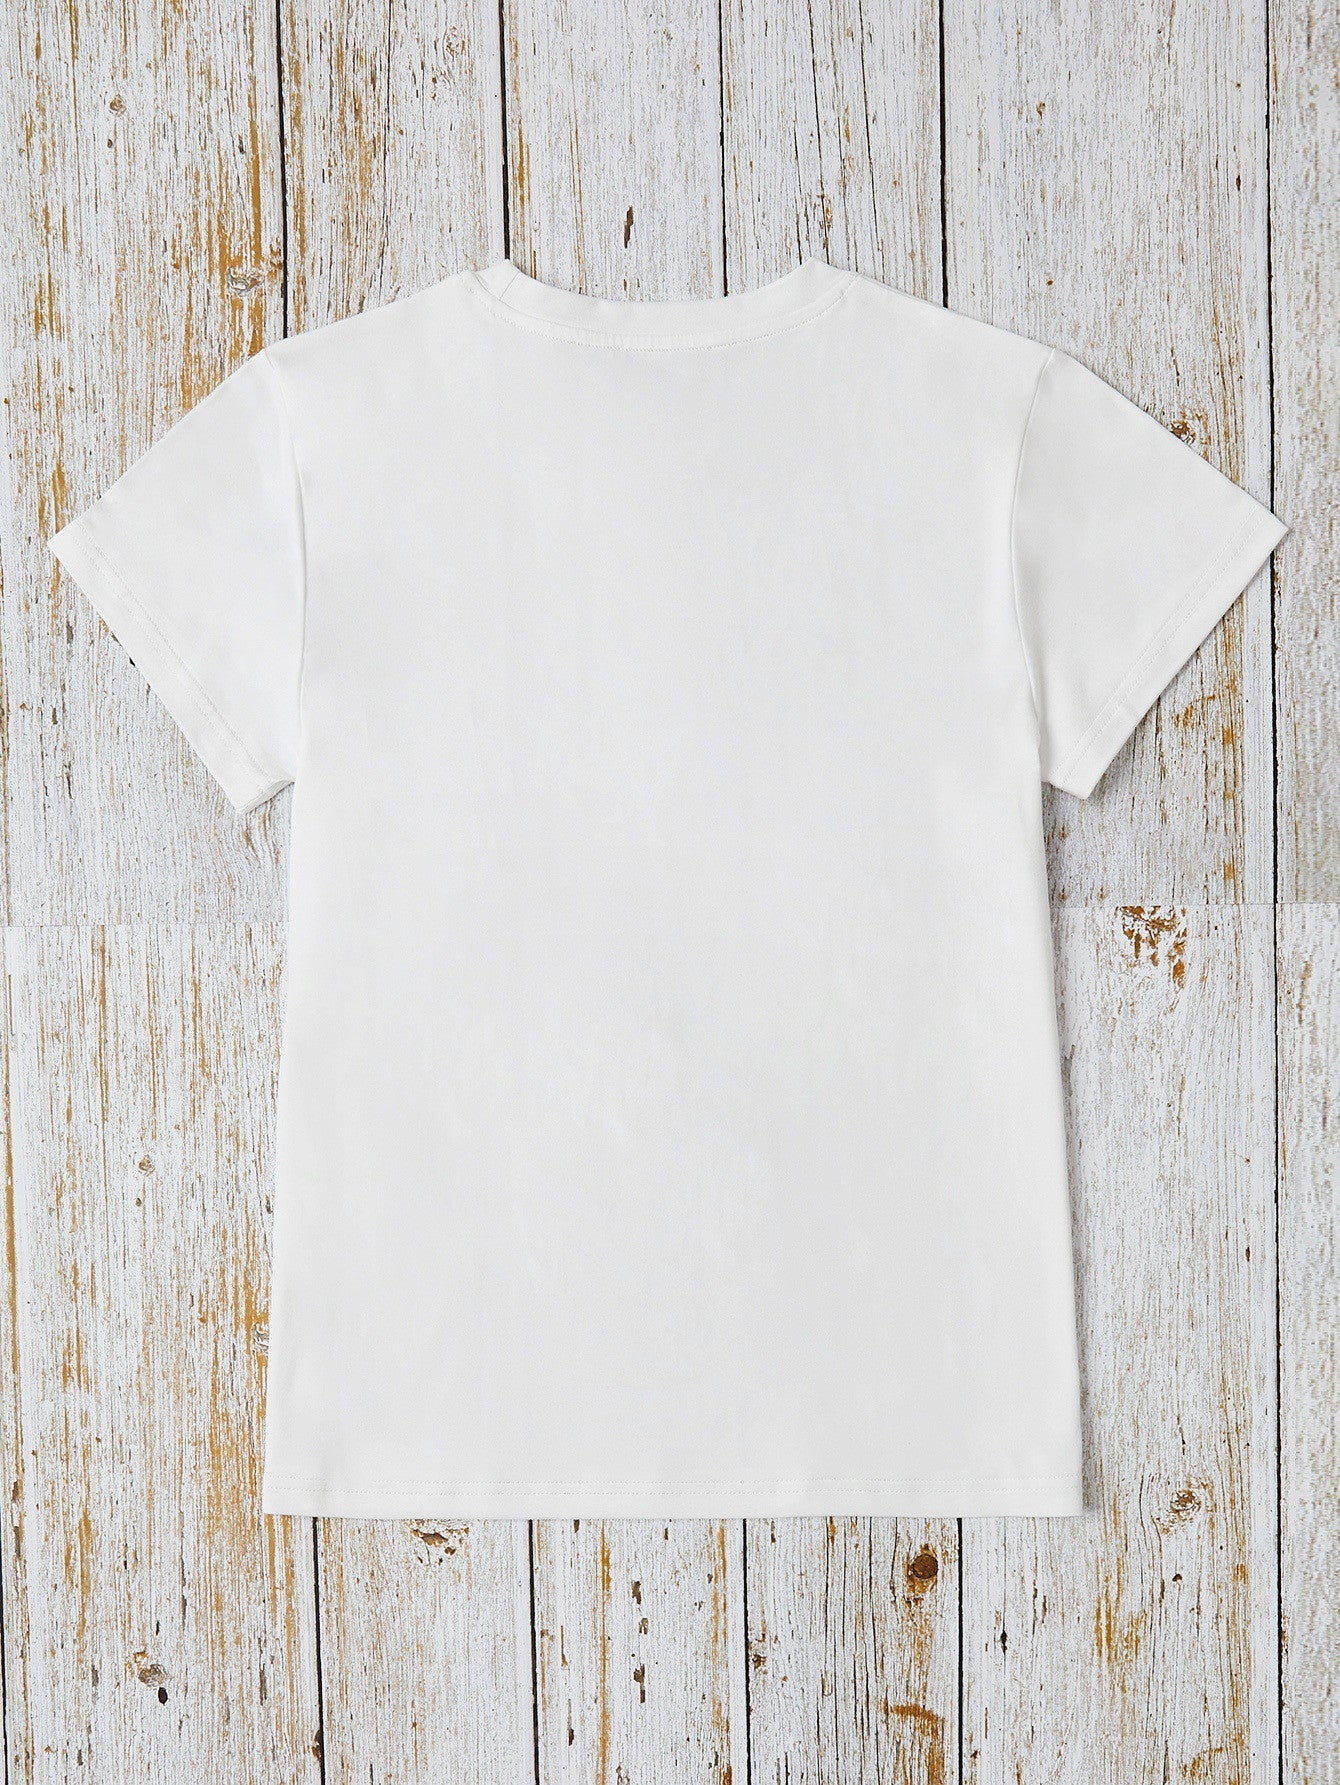 Women Letter Graphic Round Neck Short Sleeve Religious T-Shirt